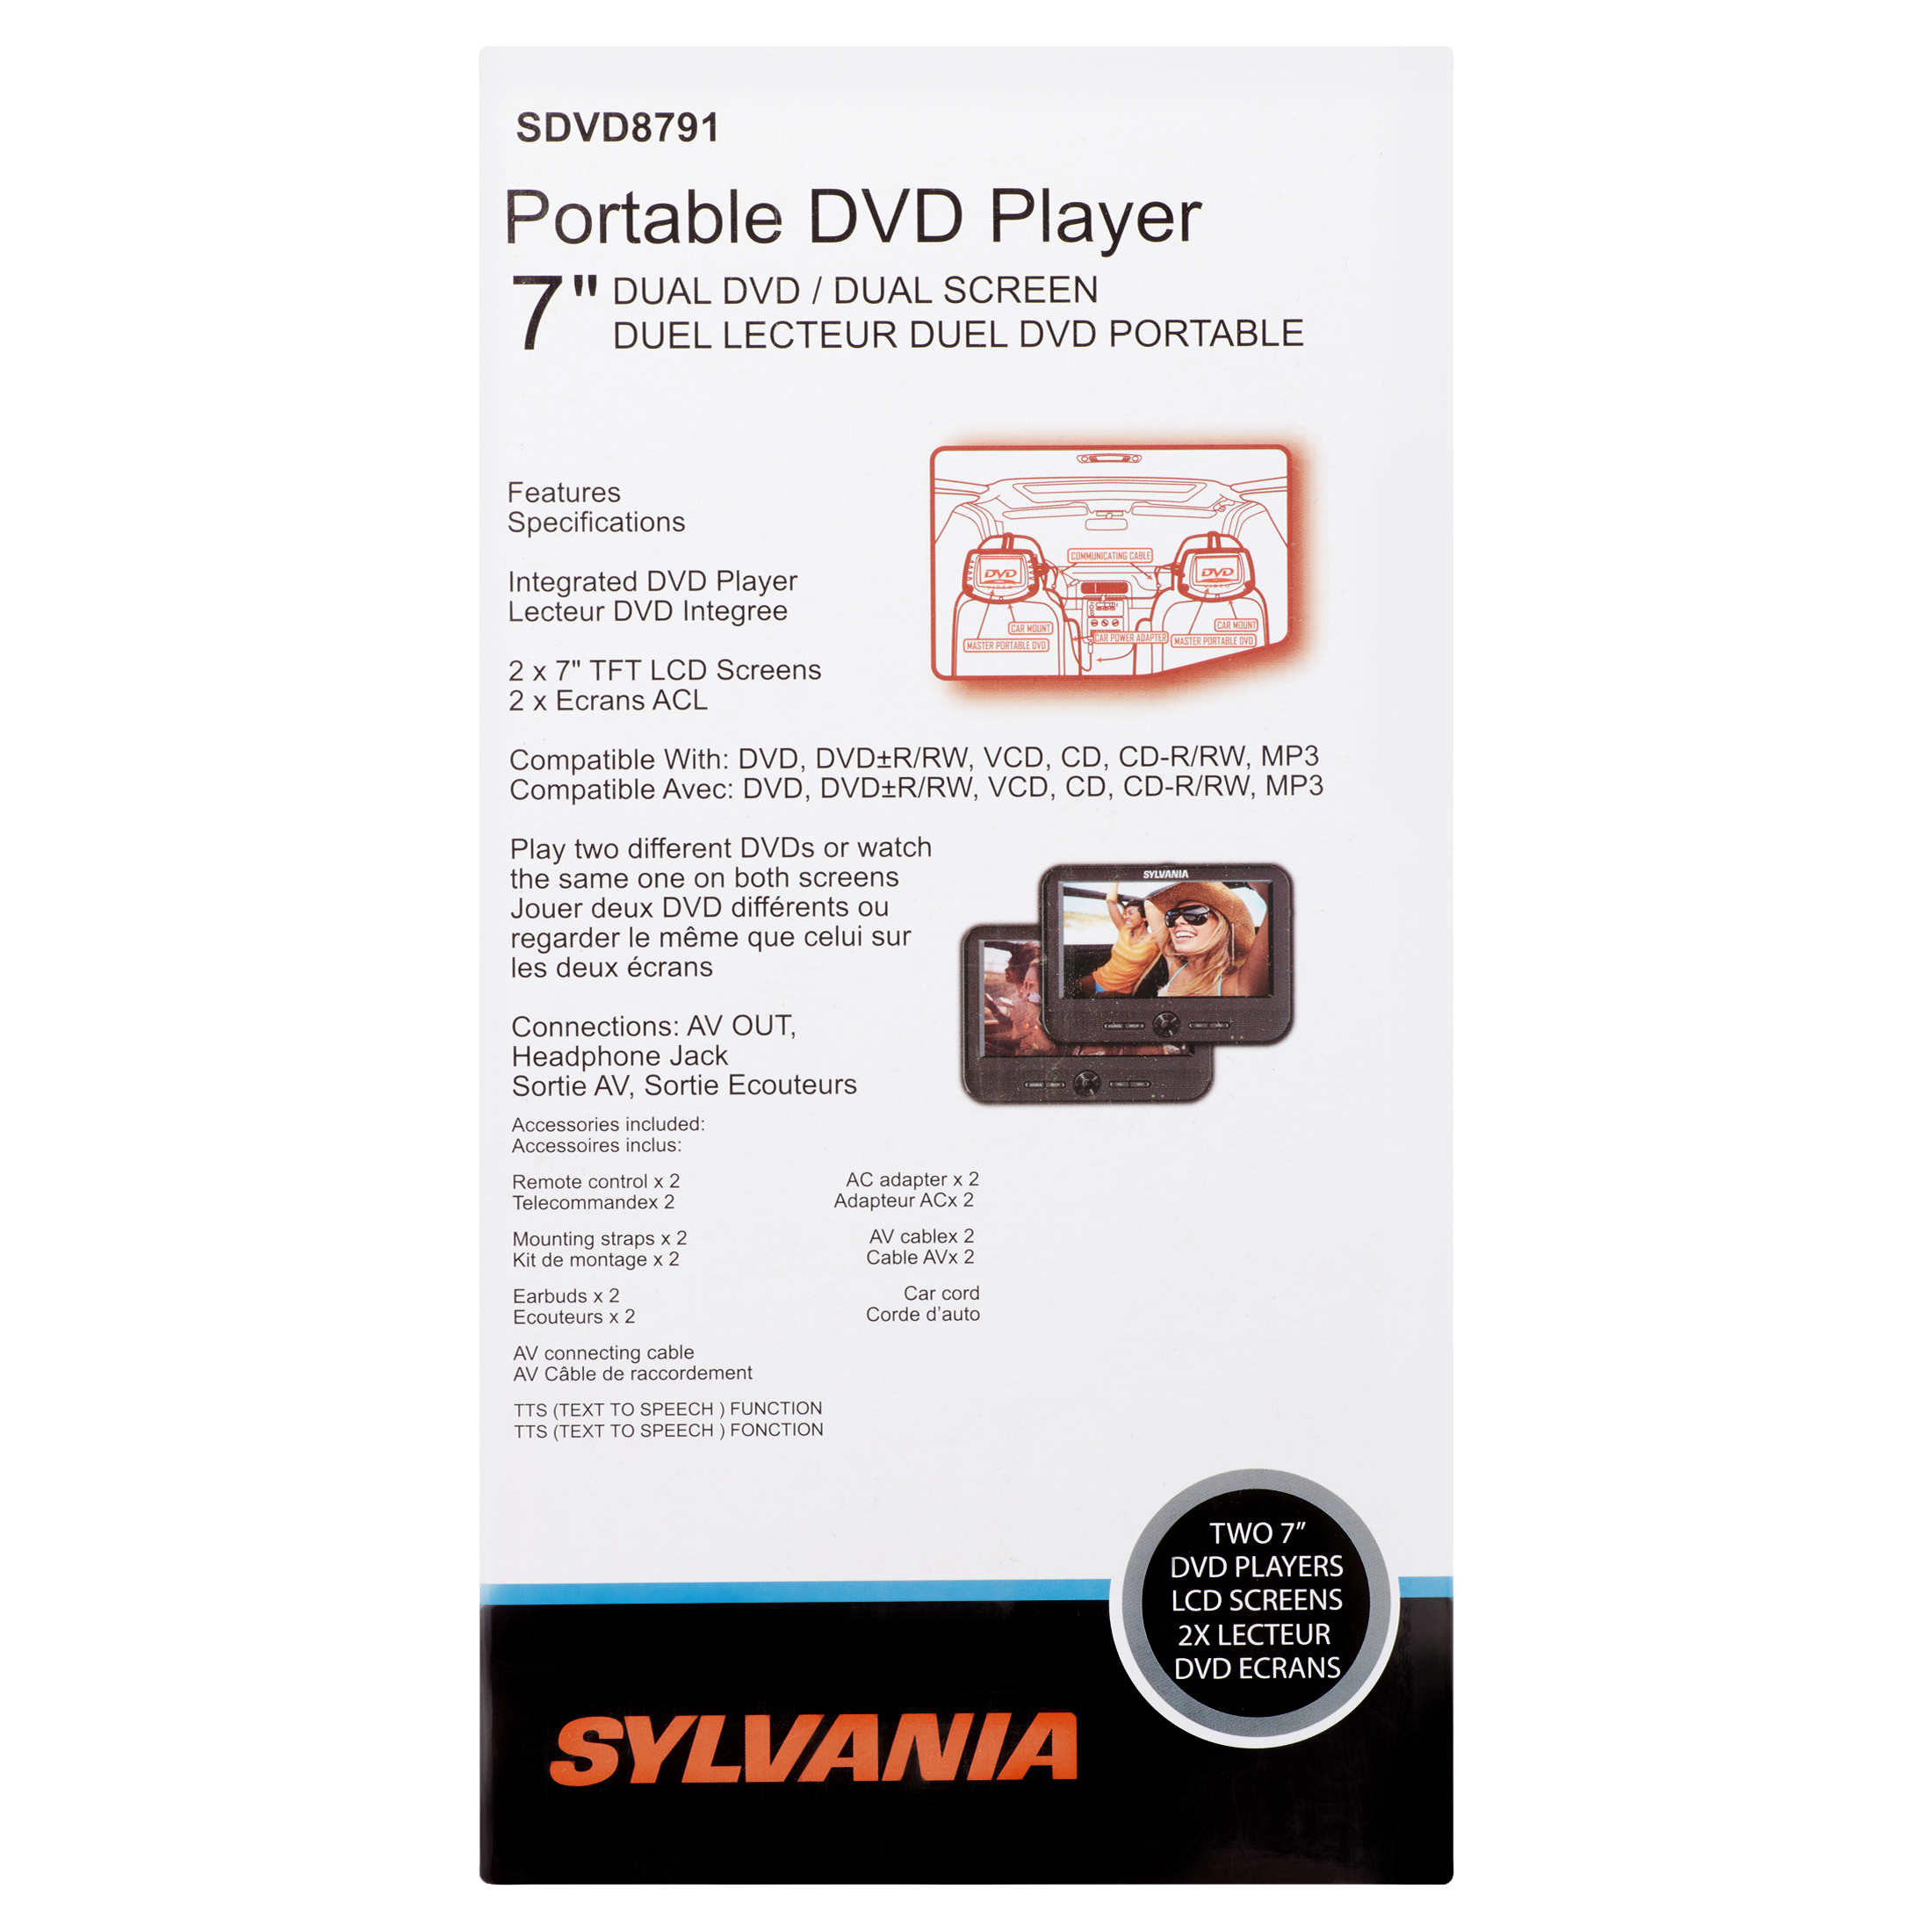 Sylvania 7" Dual Screen Portable DVD Player with Dual DVD Players, SDVD8791 - image 5 of 9